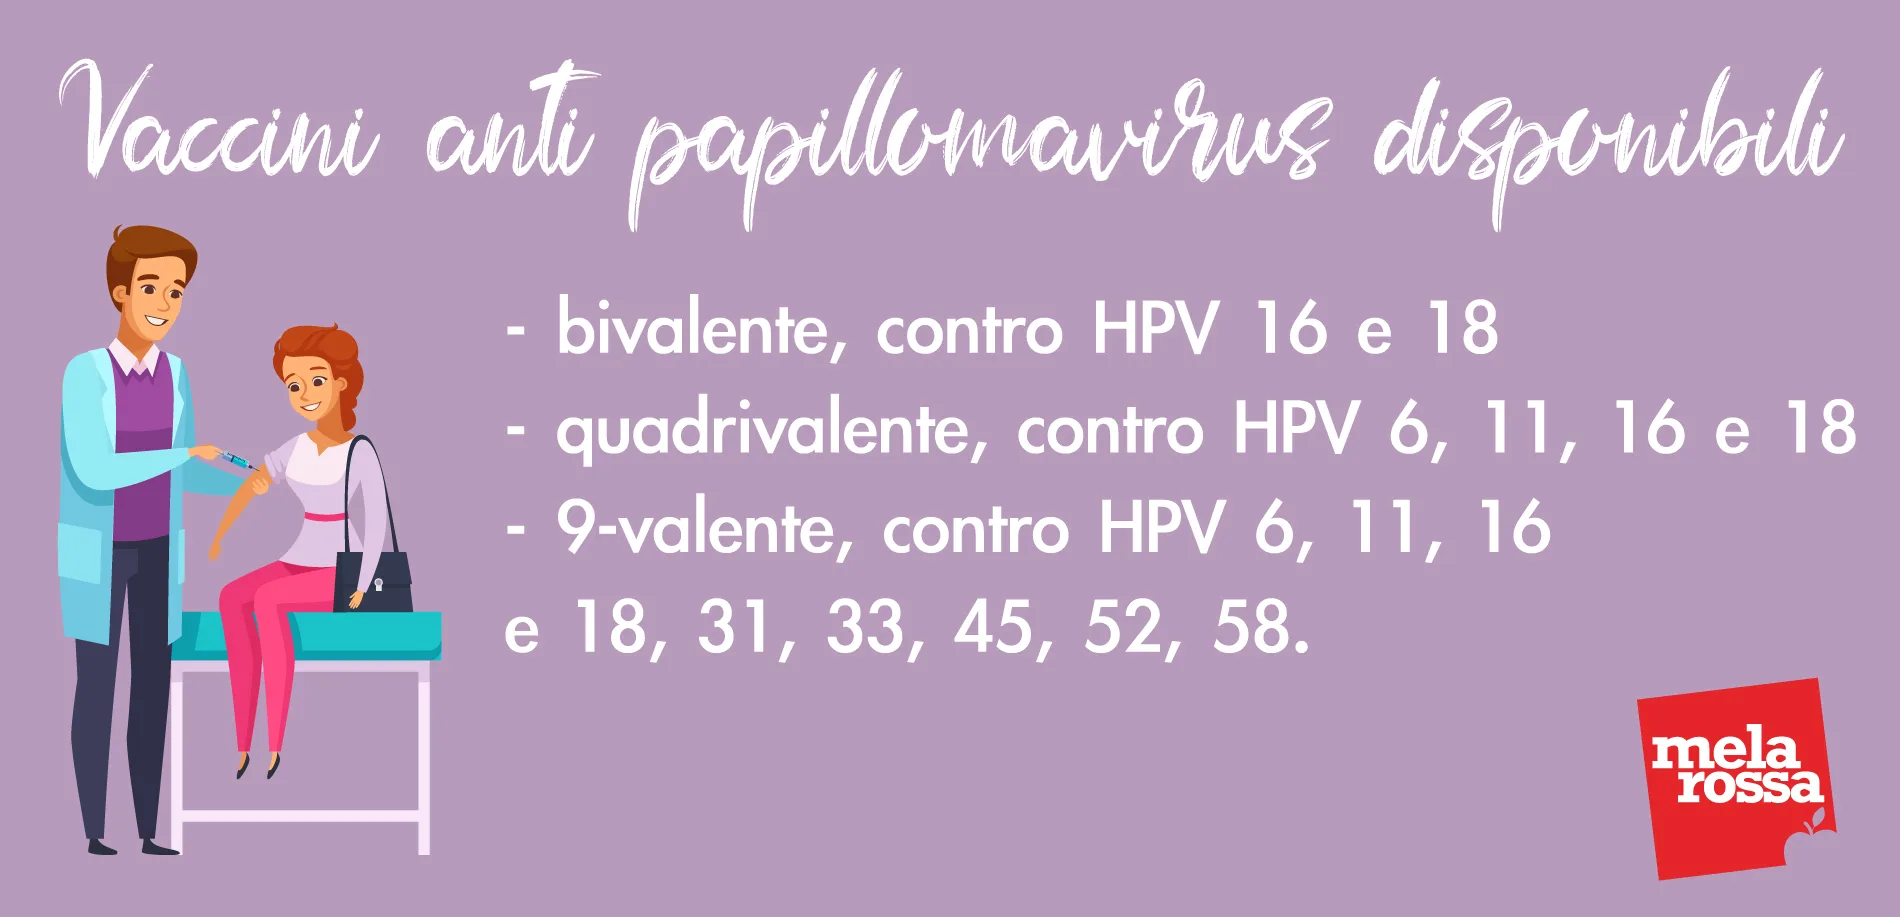 papilloma virus vaccino verginita